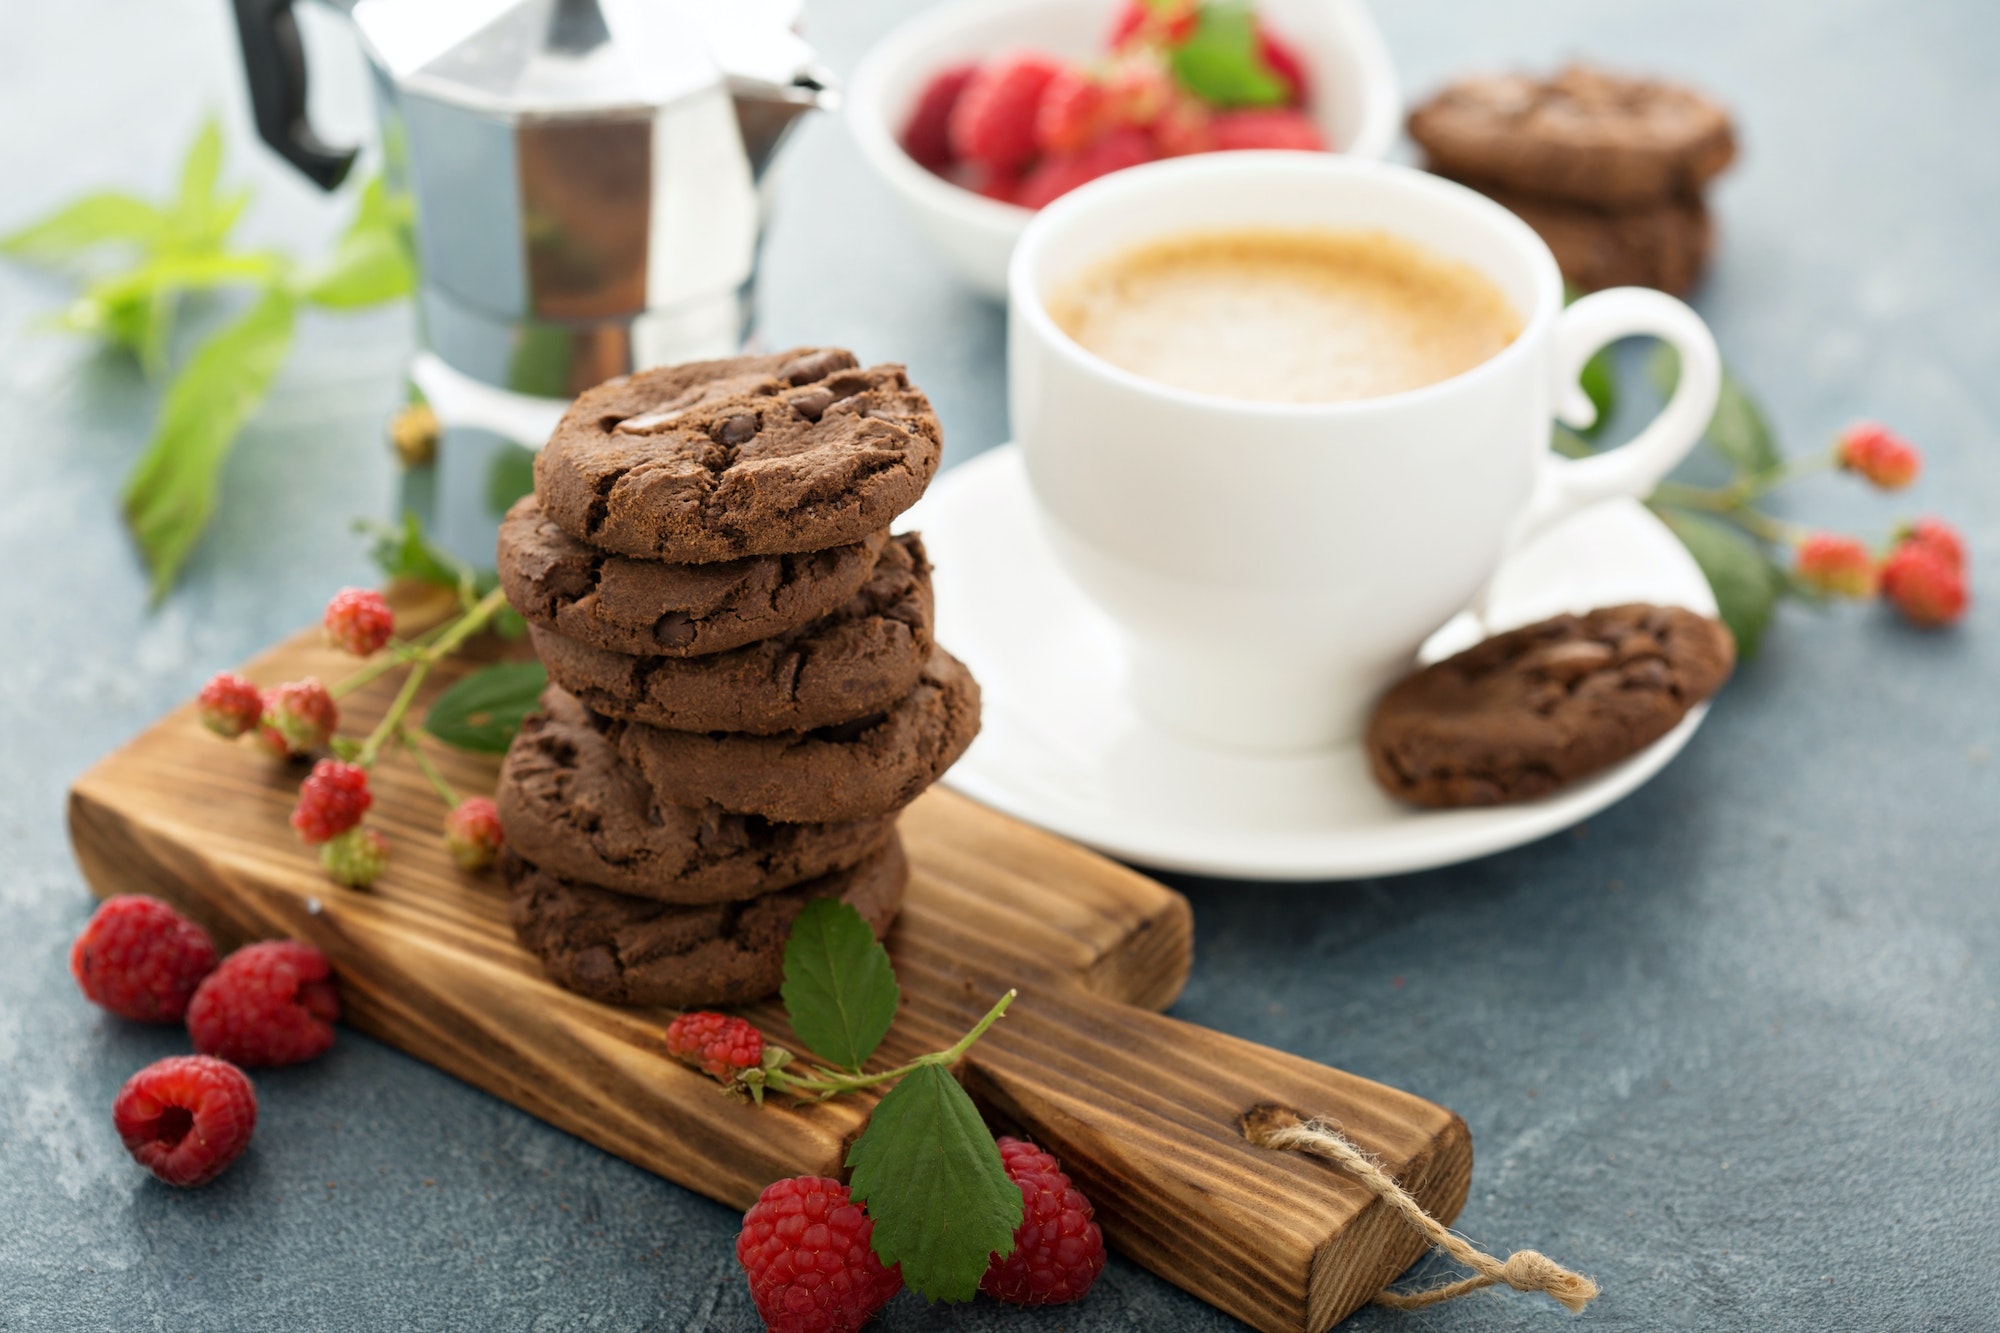 Chocolate cookies with coffee